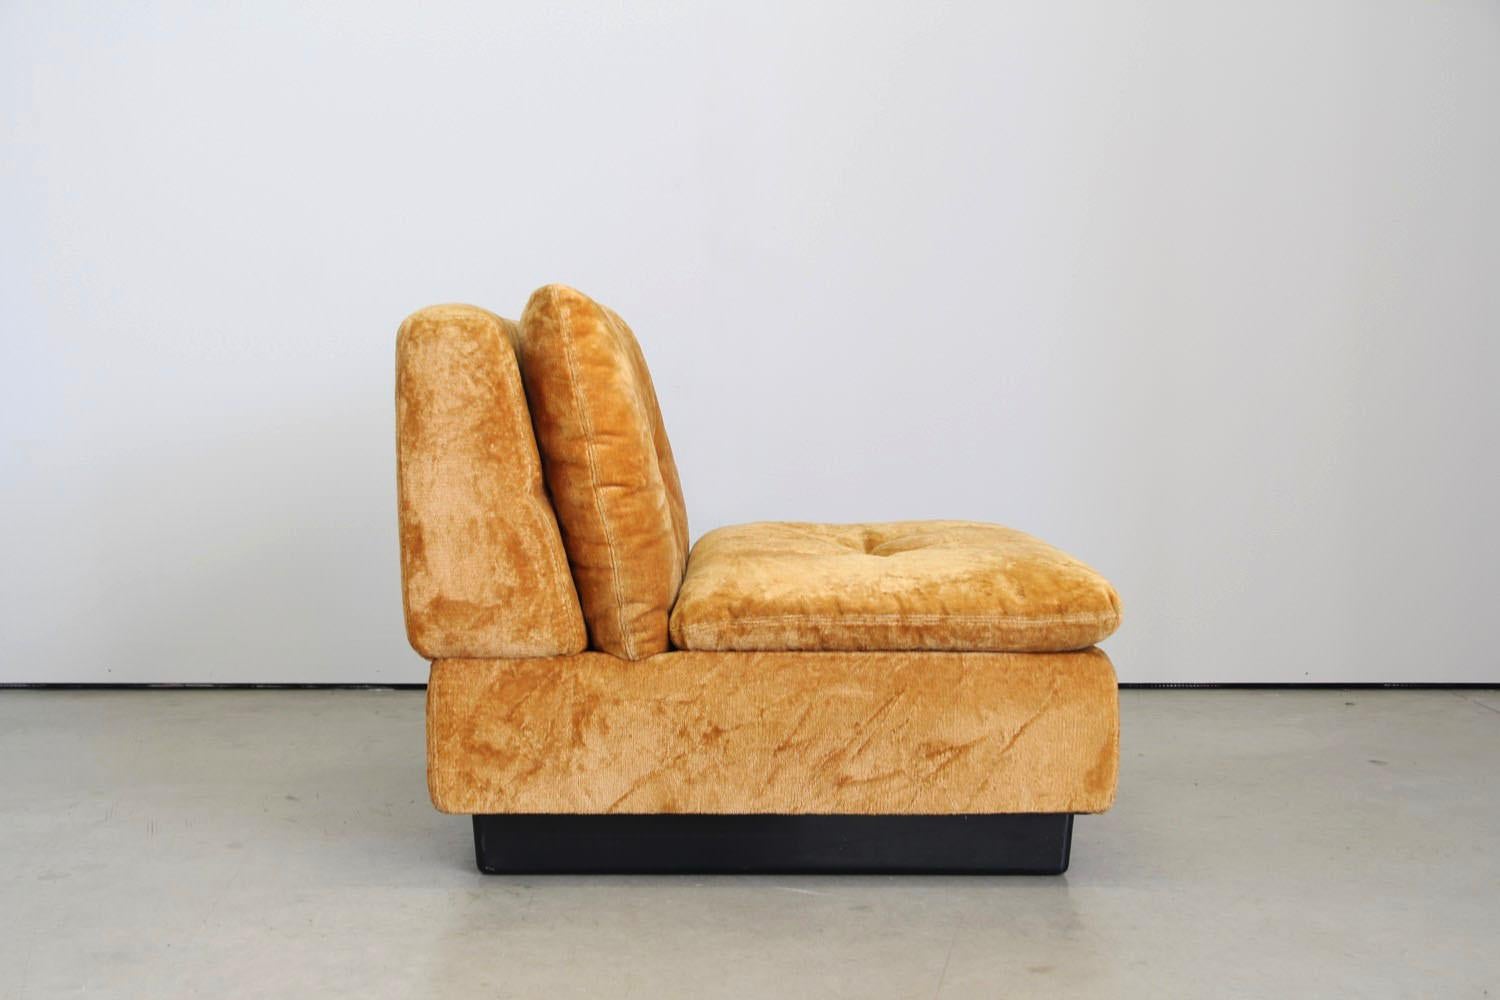 Modulares Saporiti Italia-Sofa-Sitzsystem, 1970er Jahre (Ende des 20. Jahrhunderts)